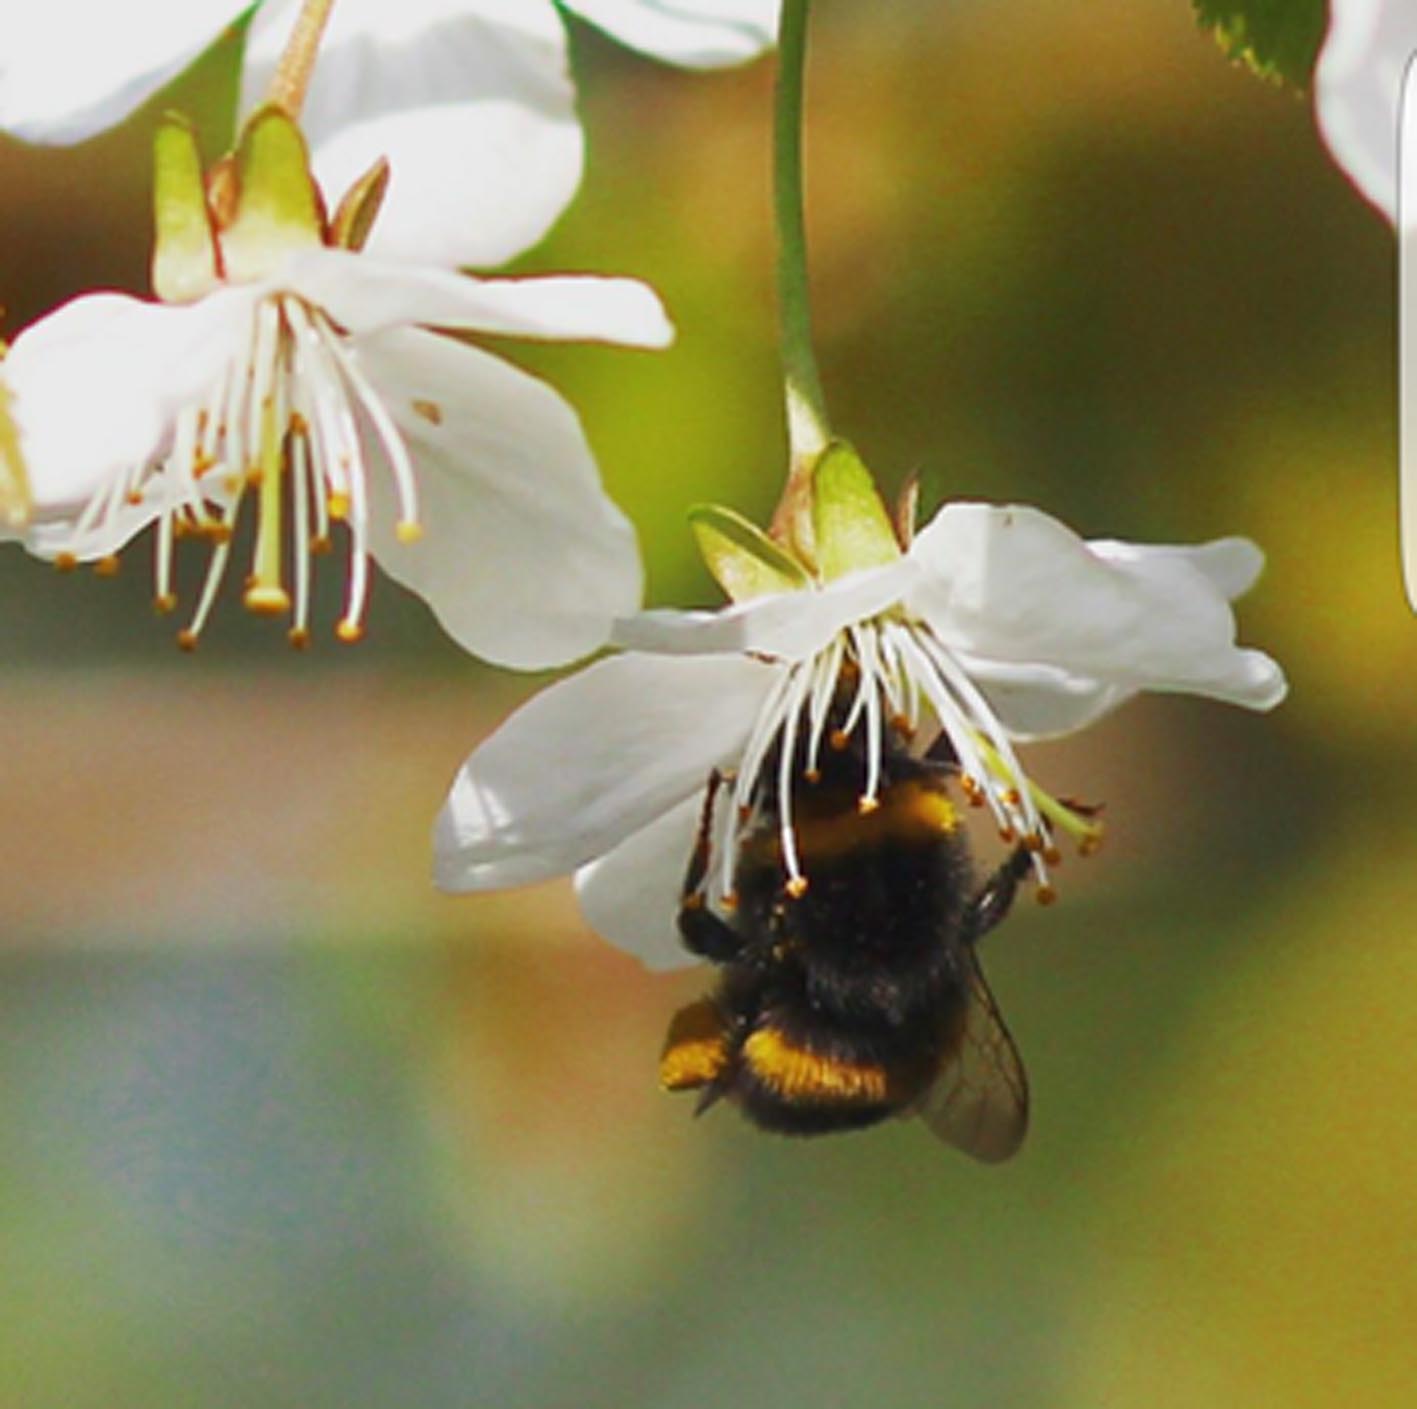 Bumble bee in flower photo taken by @gashuset.